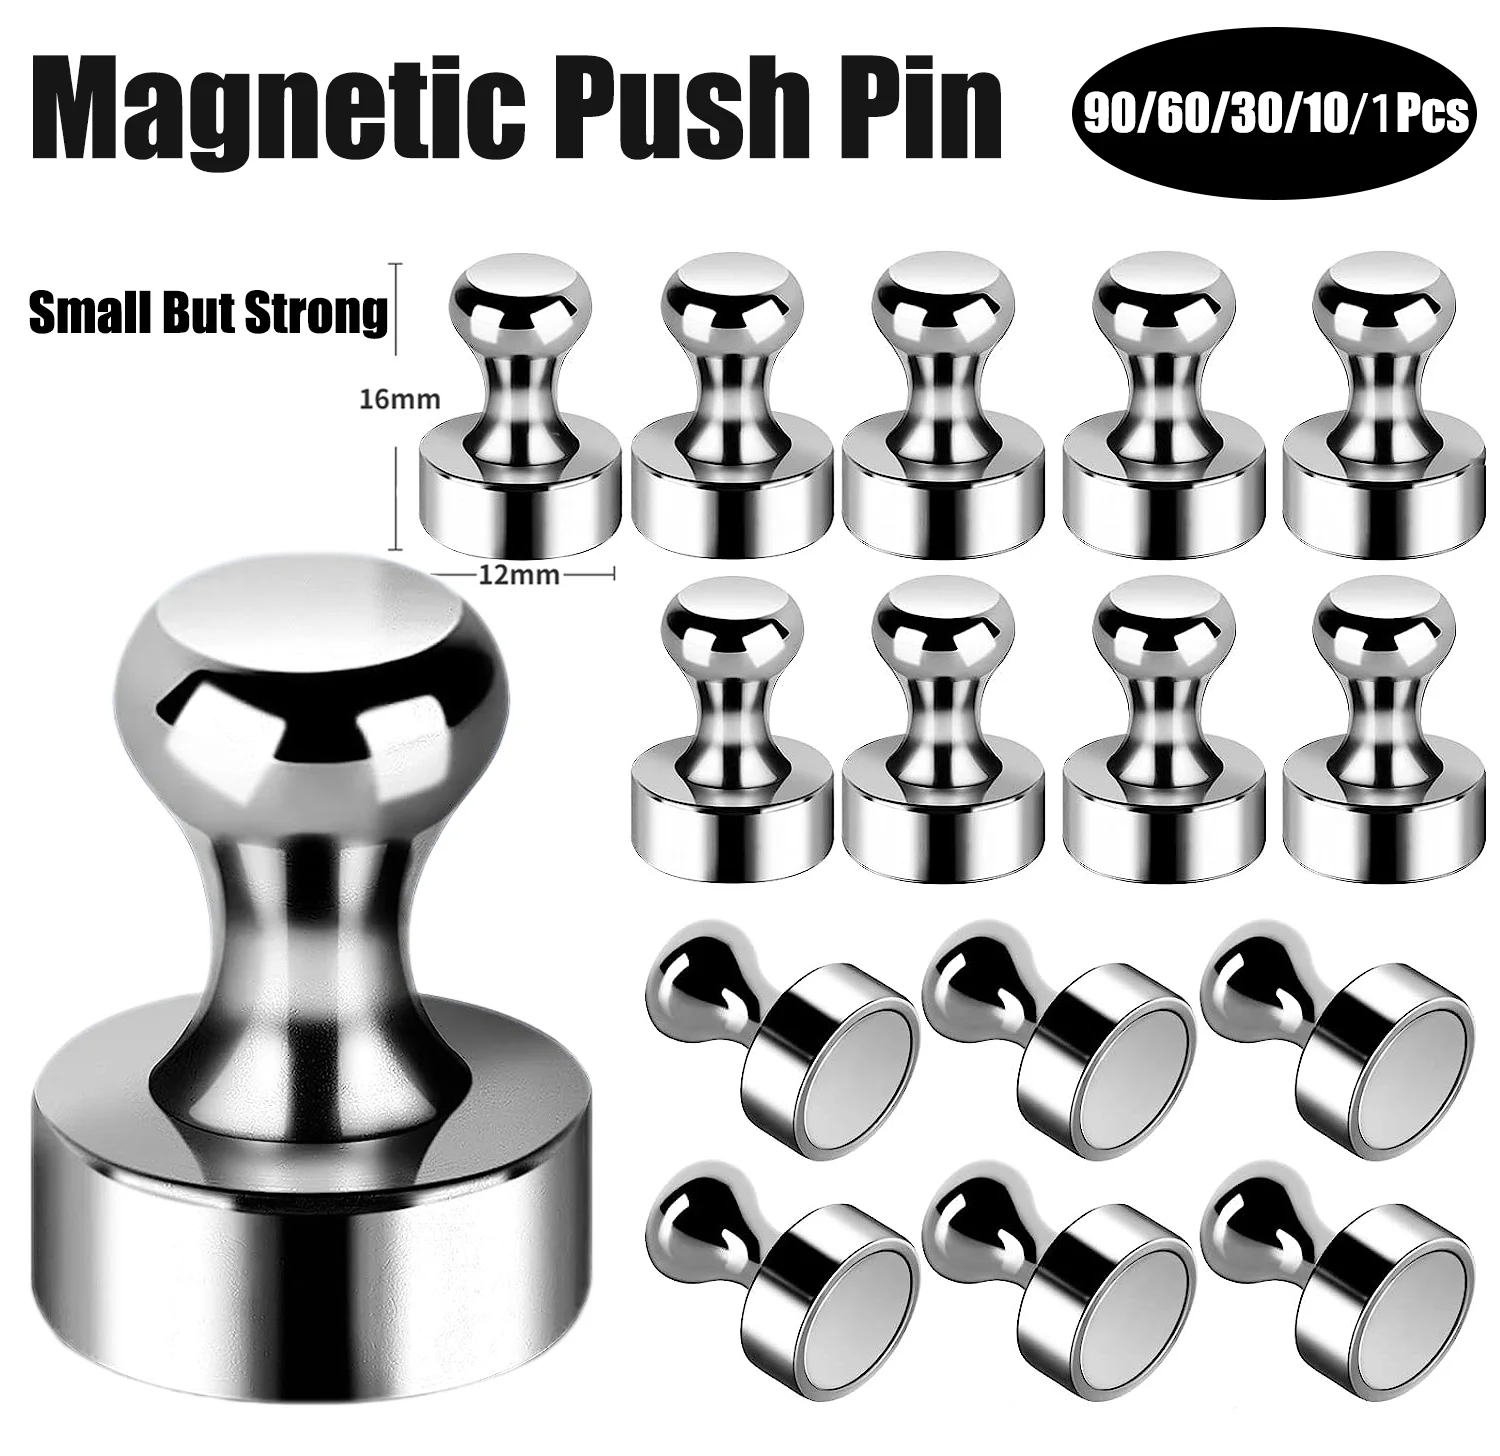 

90/60/30/10Pcs Pushpins Magnets Super Strong N52 Magnetic Hooks Key Holder Durable Sucker Thumbtack for Fridge/Whiteboard/School